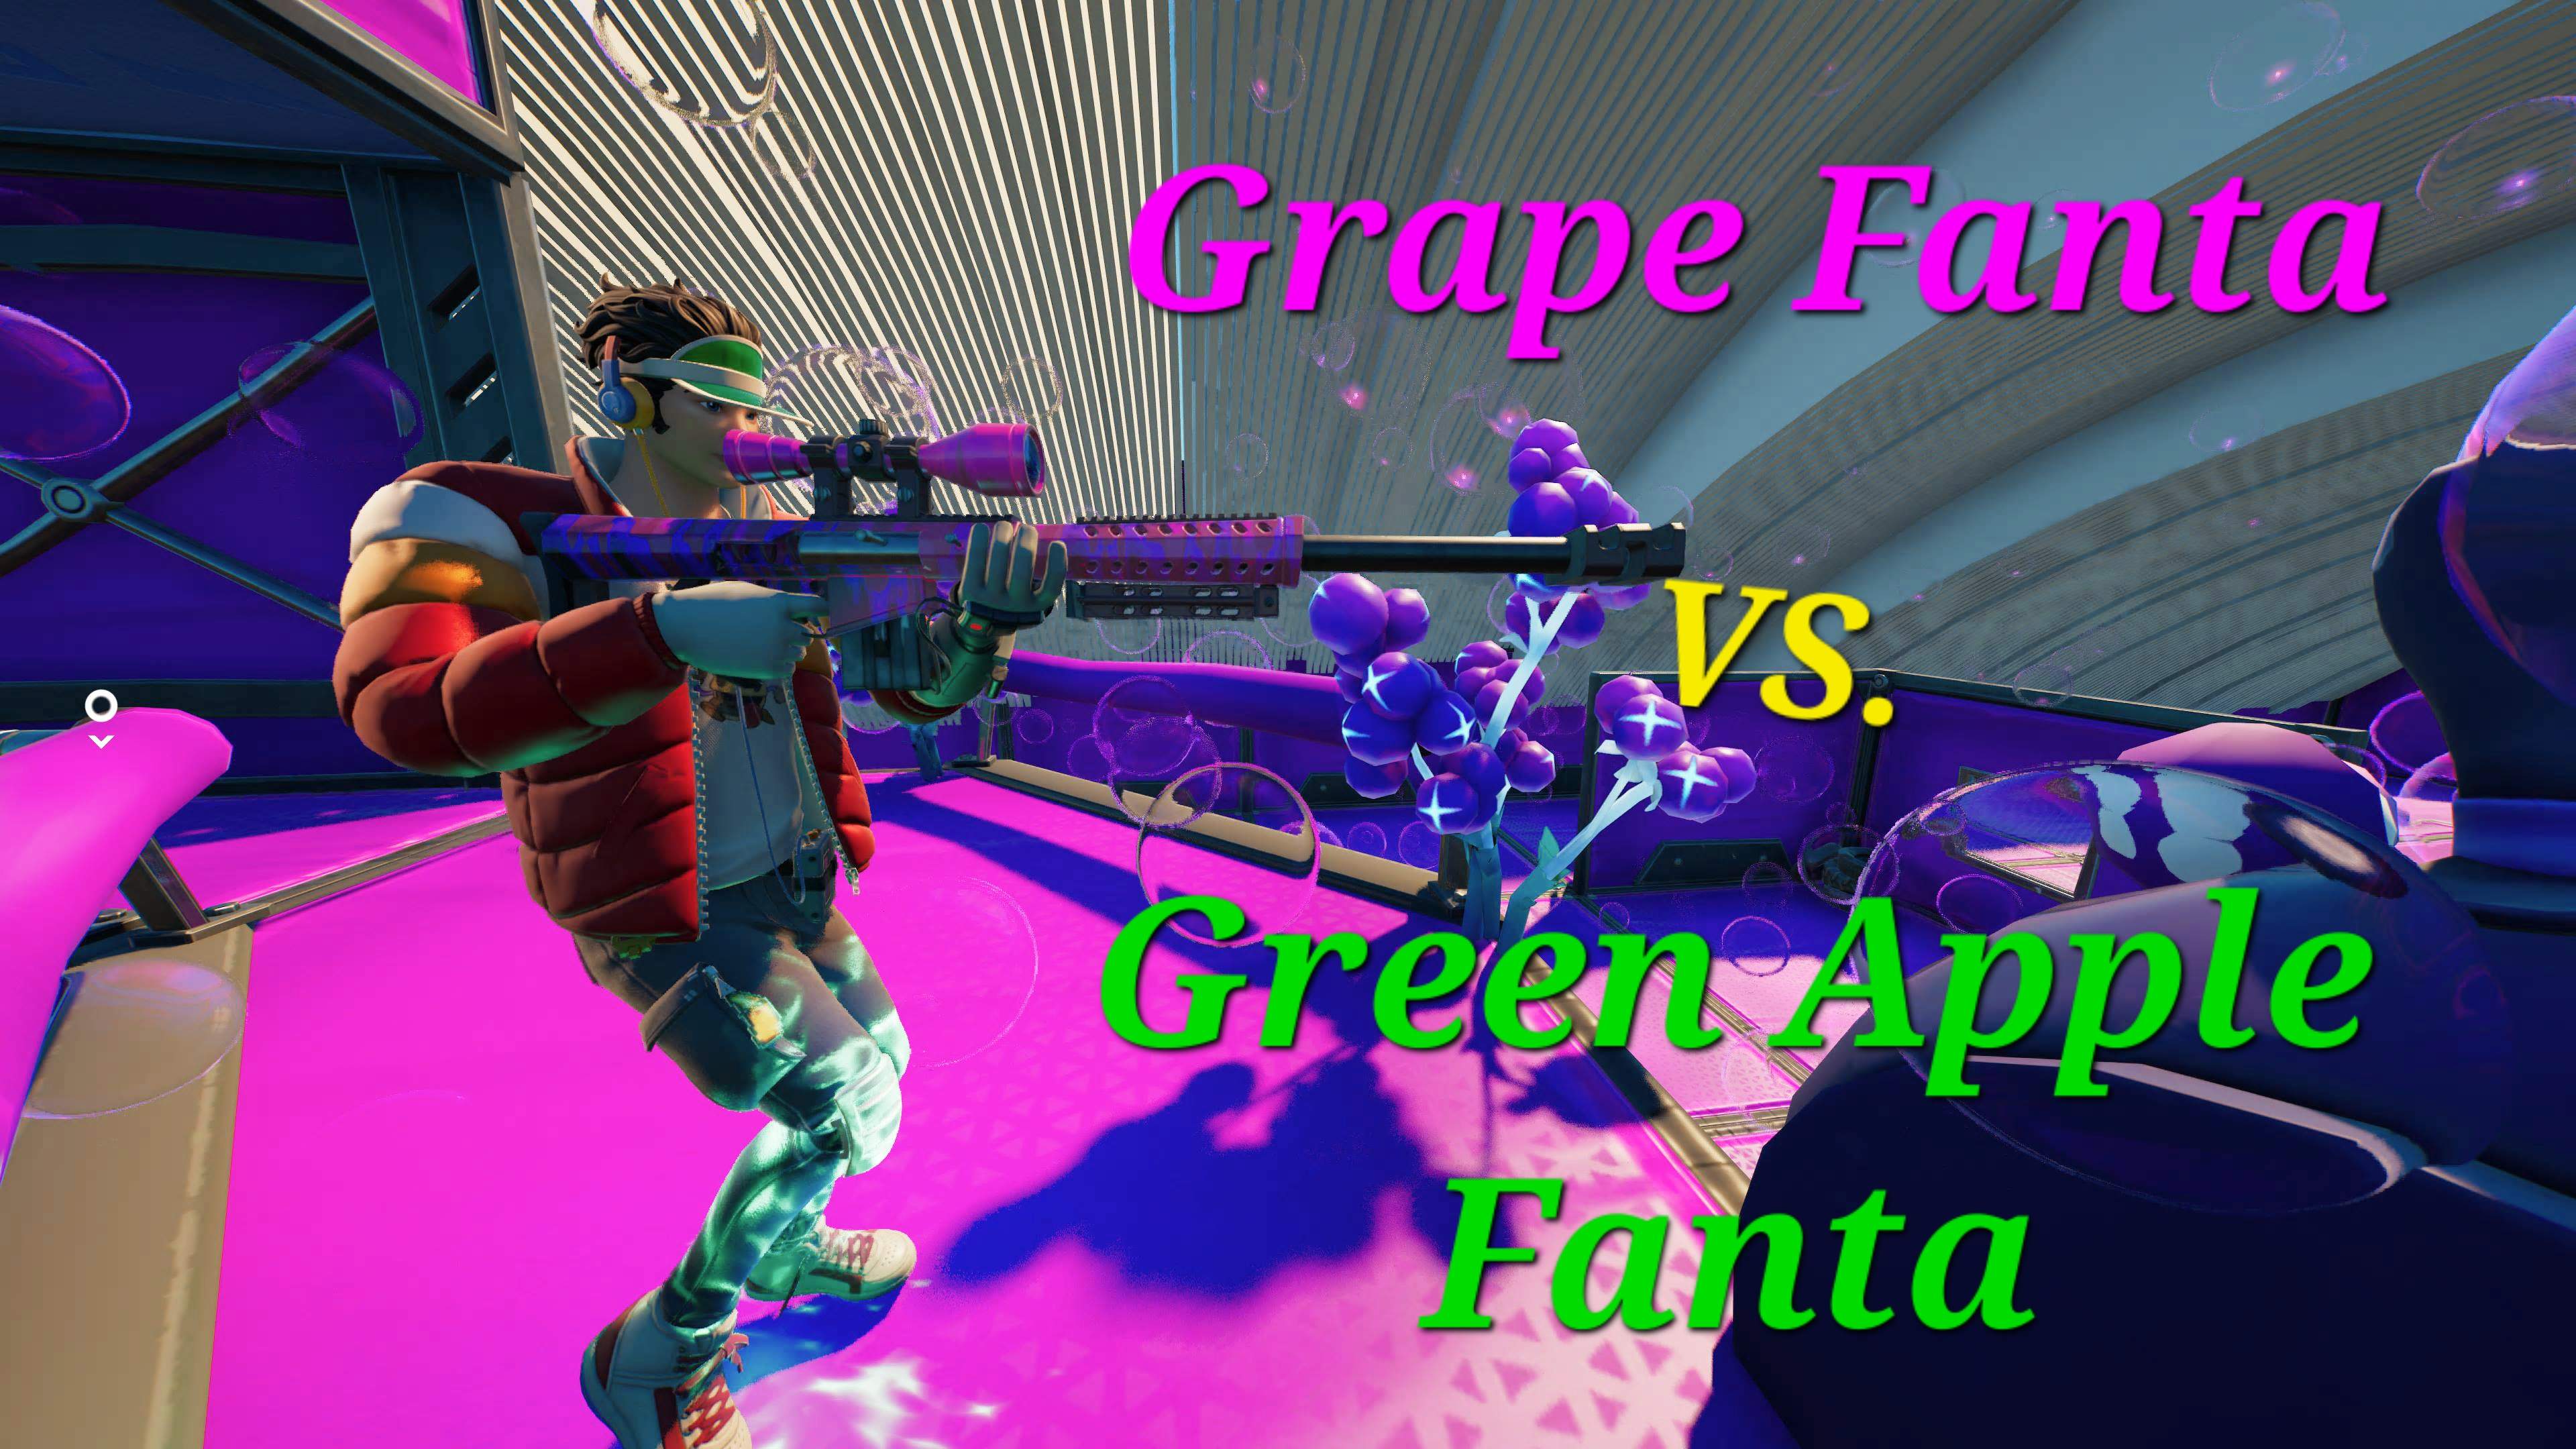 Fps Green Apple Fanta vs